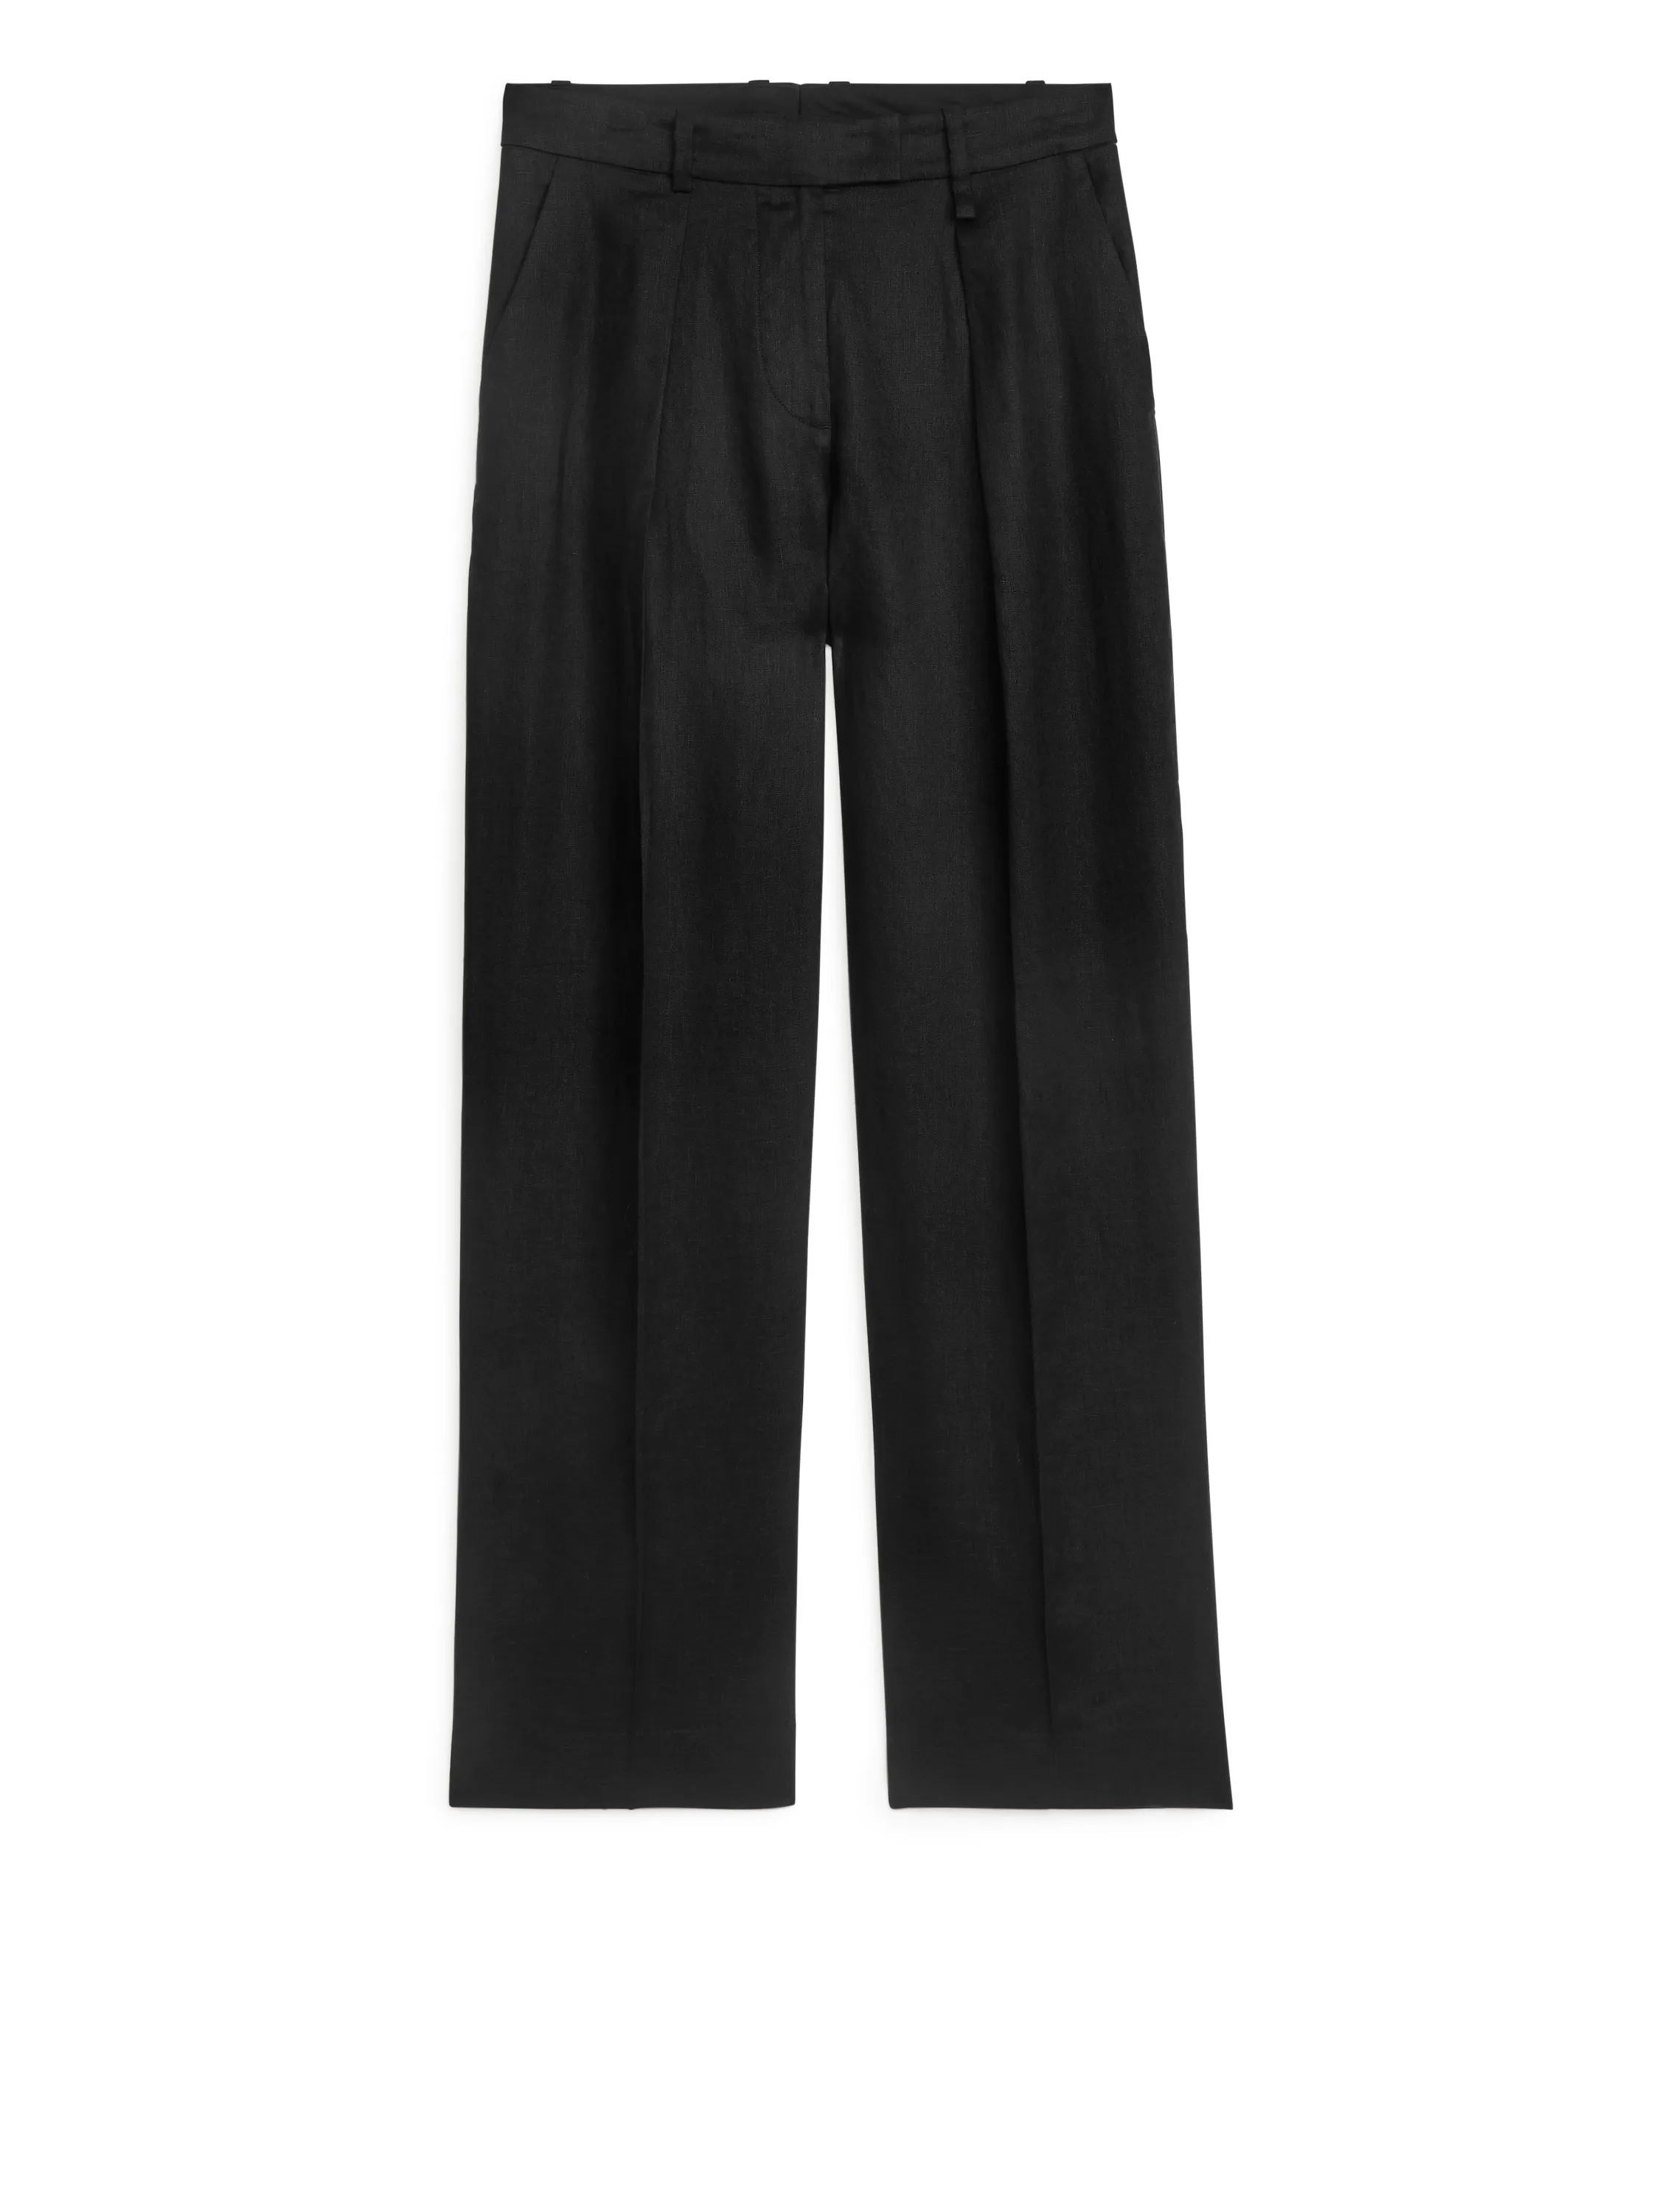 Linen Trousers
				
				£69 | ARKET (US&UK)